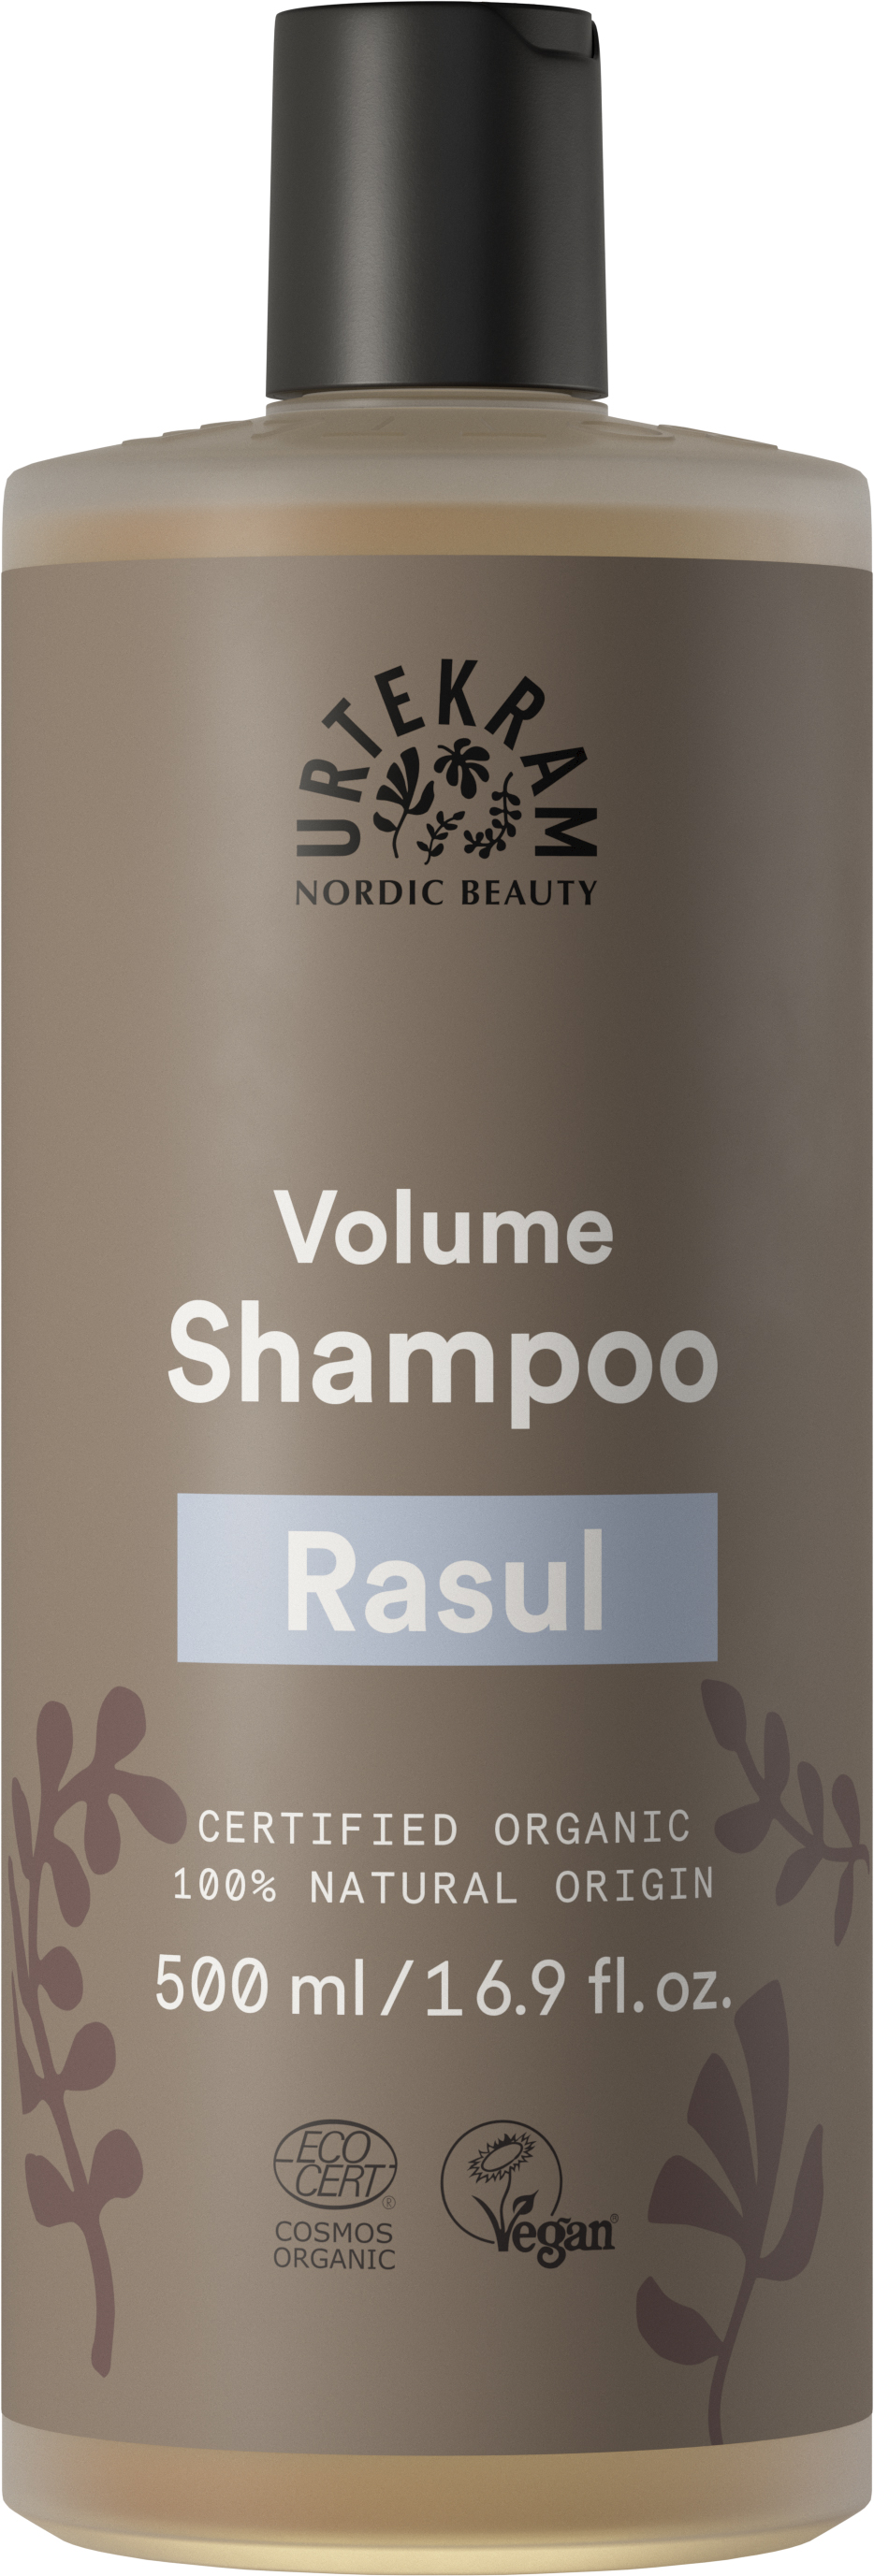 Urtekram Beauty Rasul Shampoo Volume 500 ml